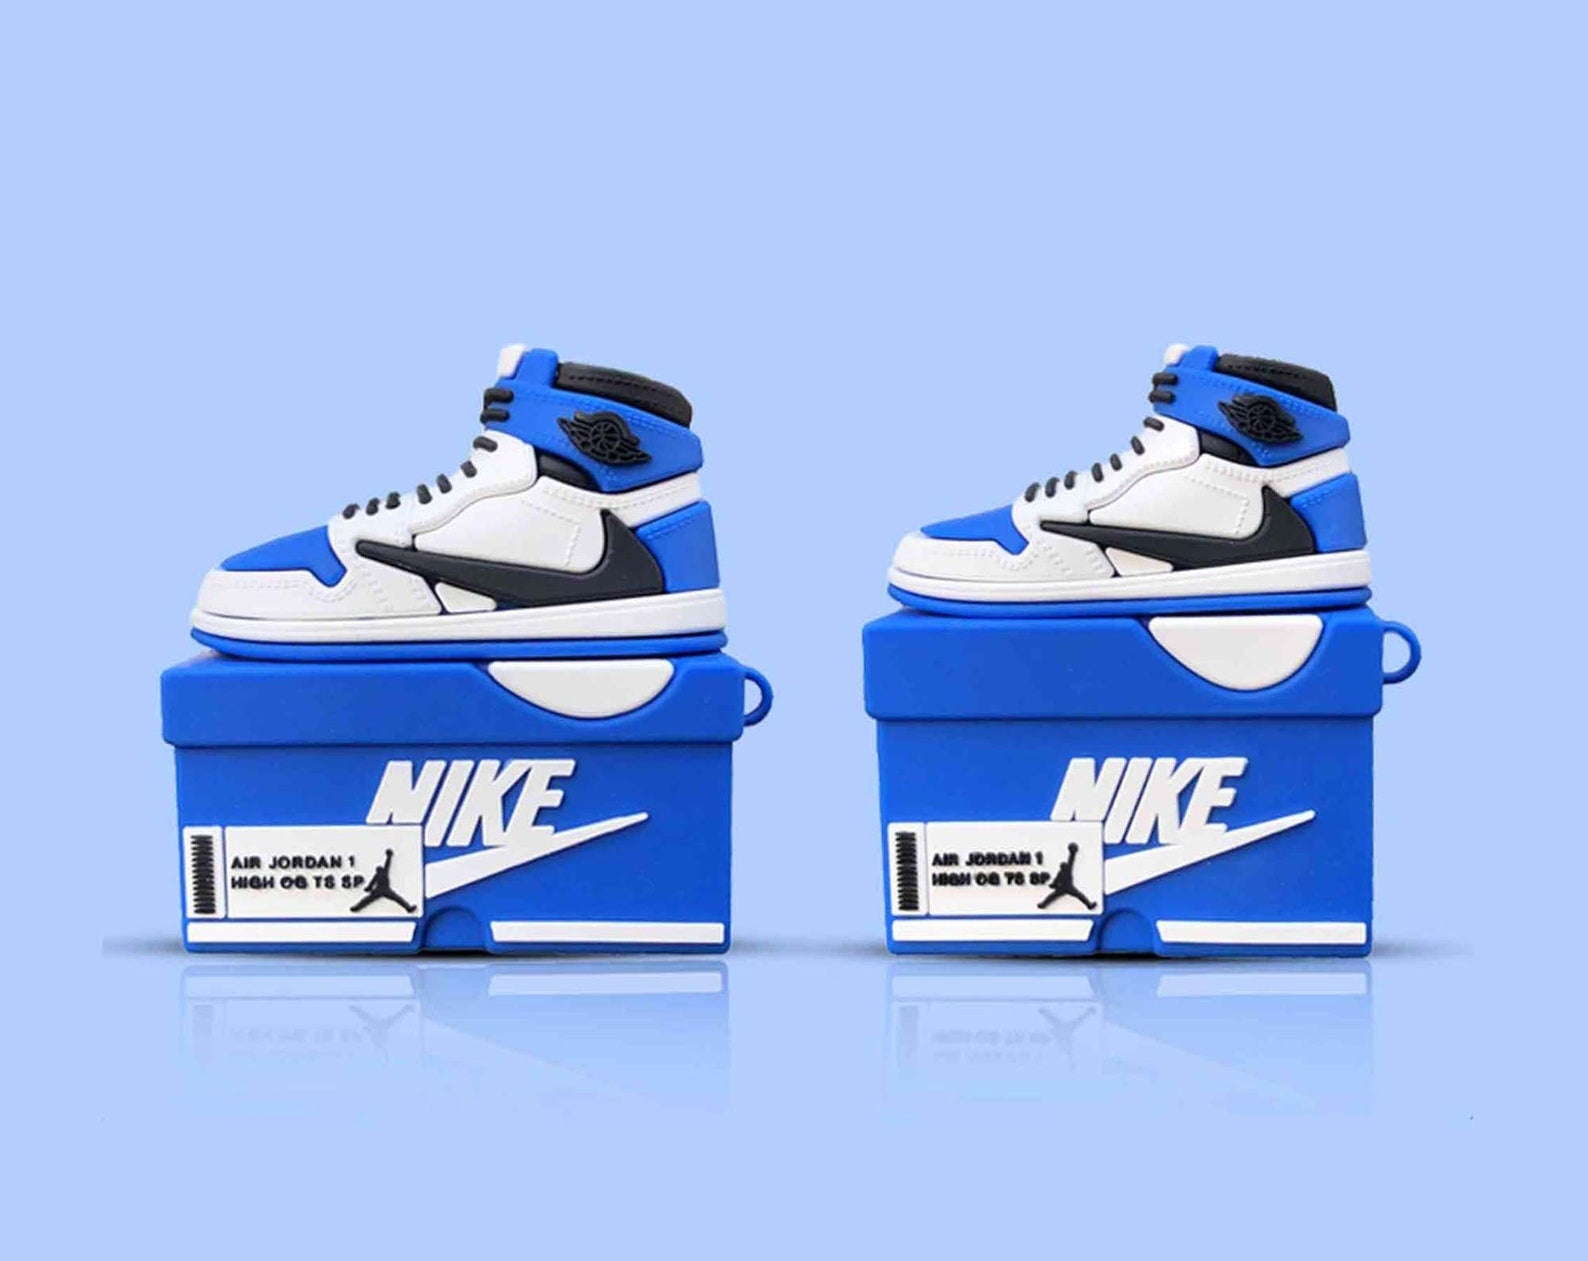 Sneaker Jordan Airpod Case for 1st 2nd Gen Airpods